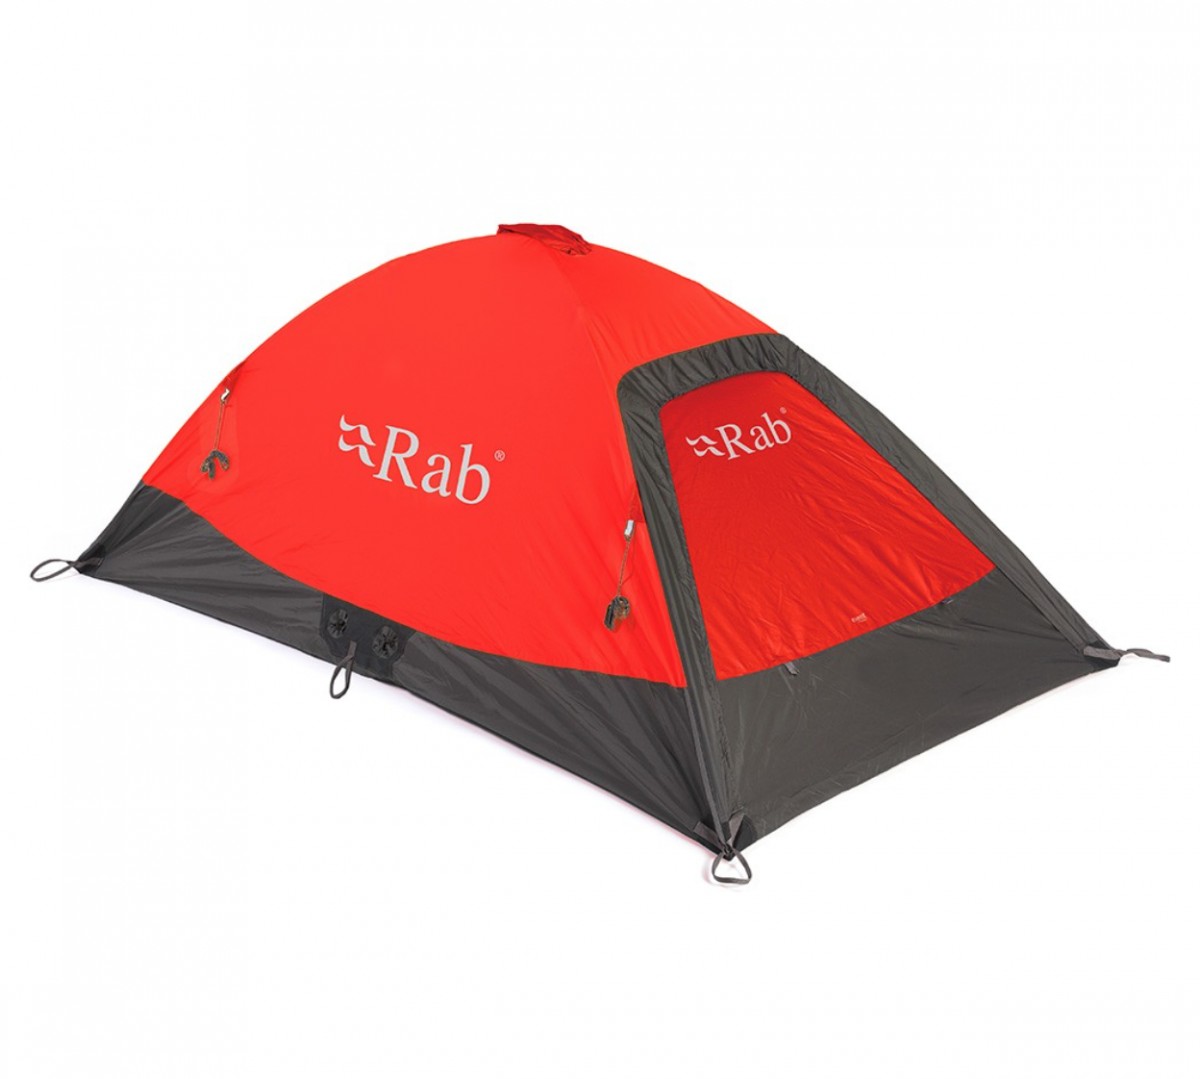 rab latok summit 4 season tent review